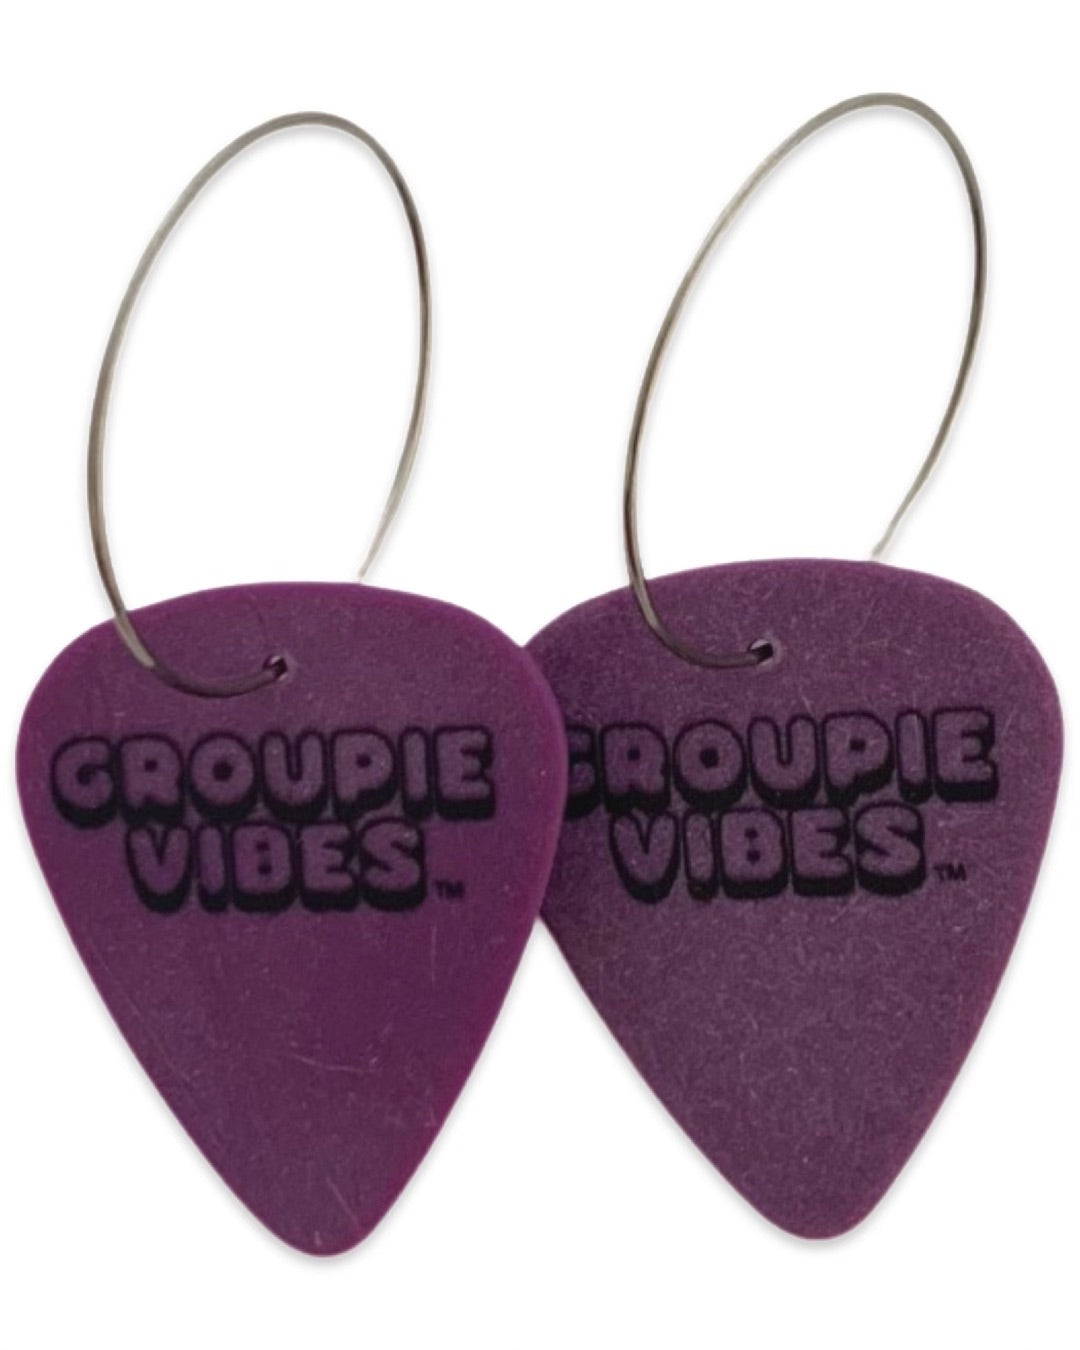 Groupie Vibes Single Guitar Pick Earrings